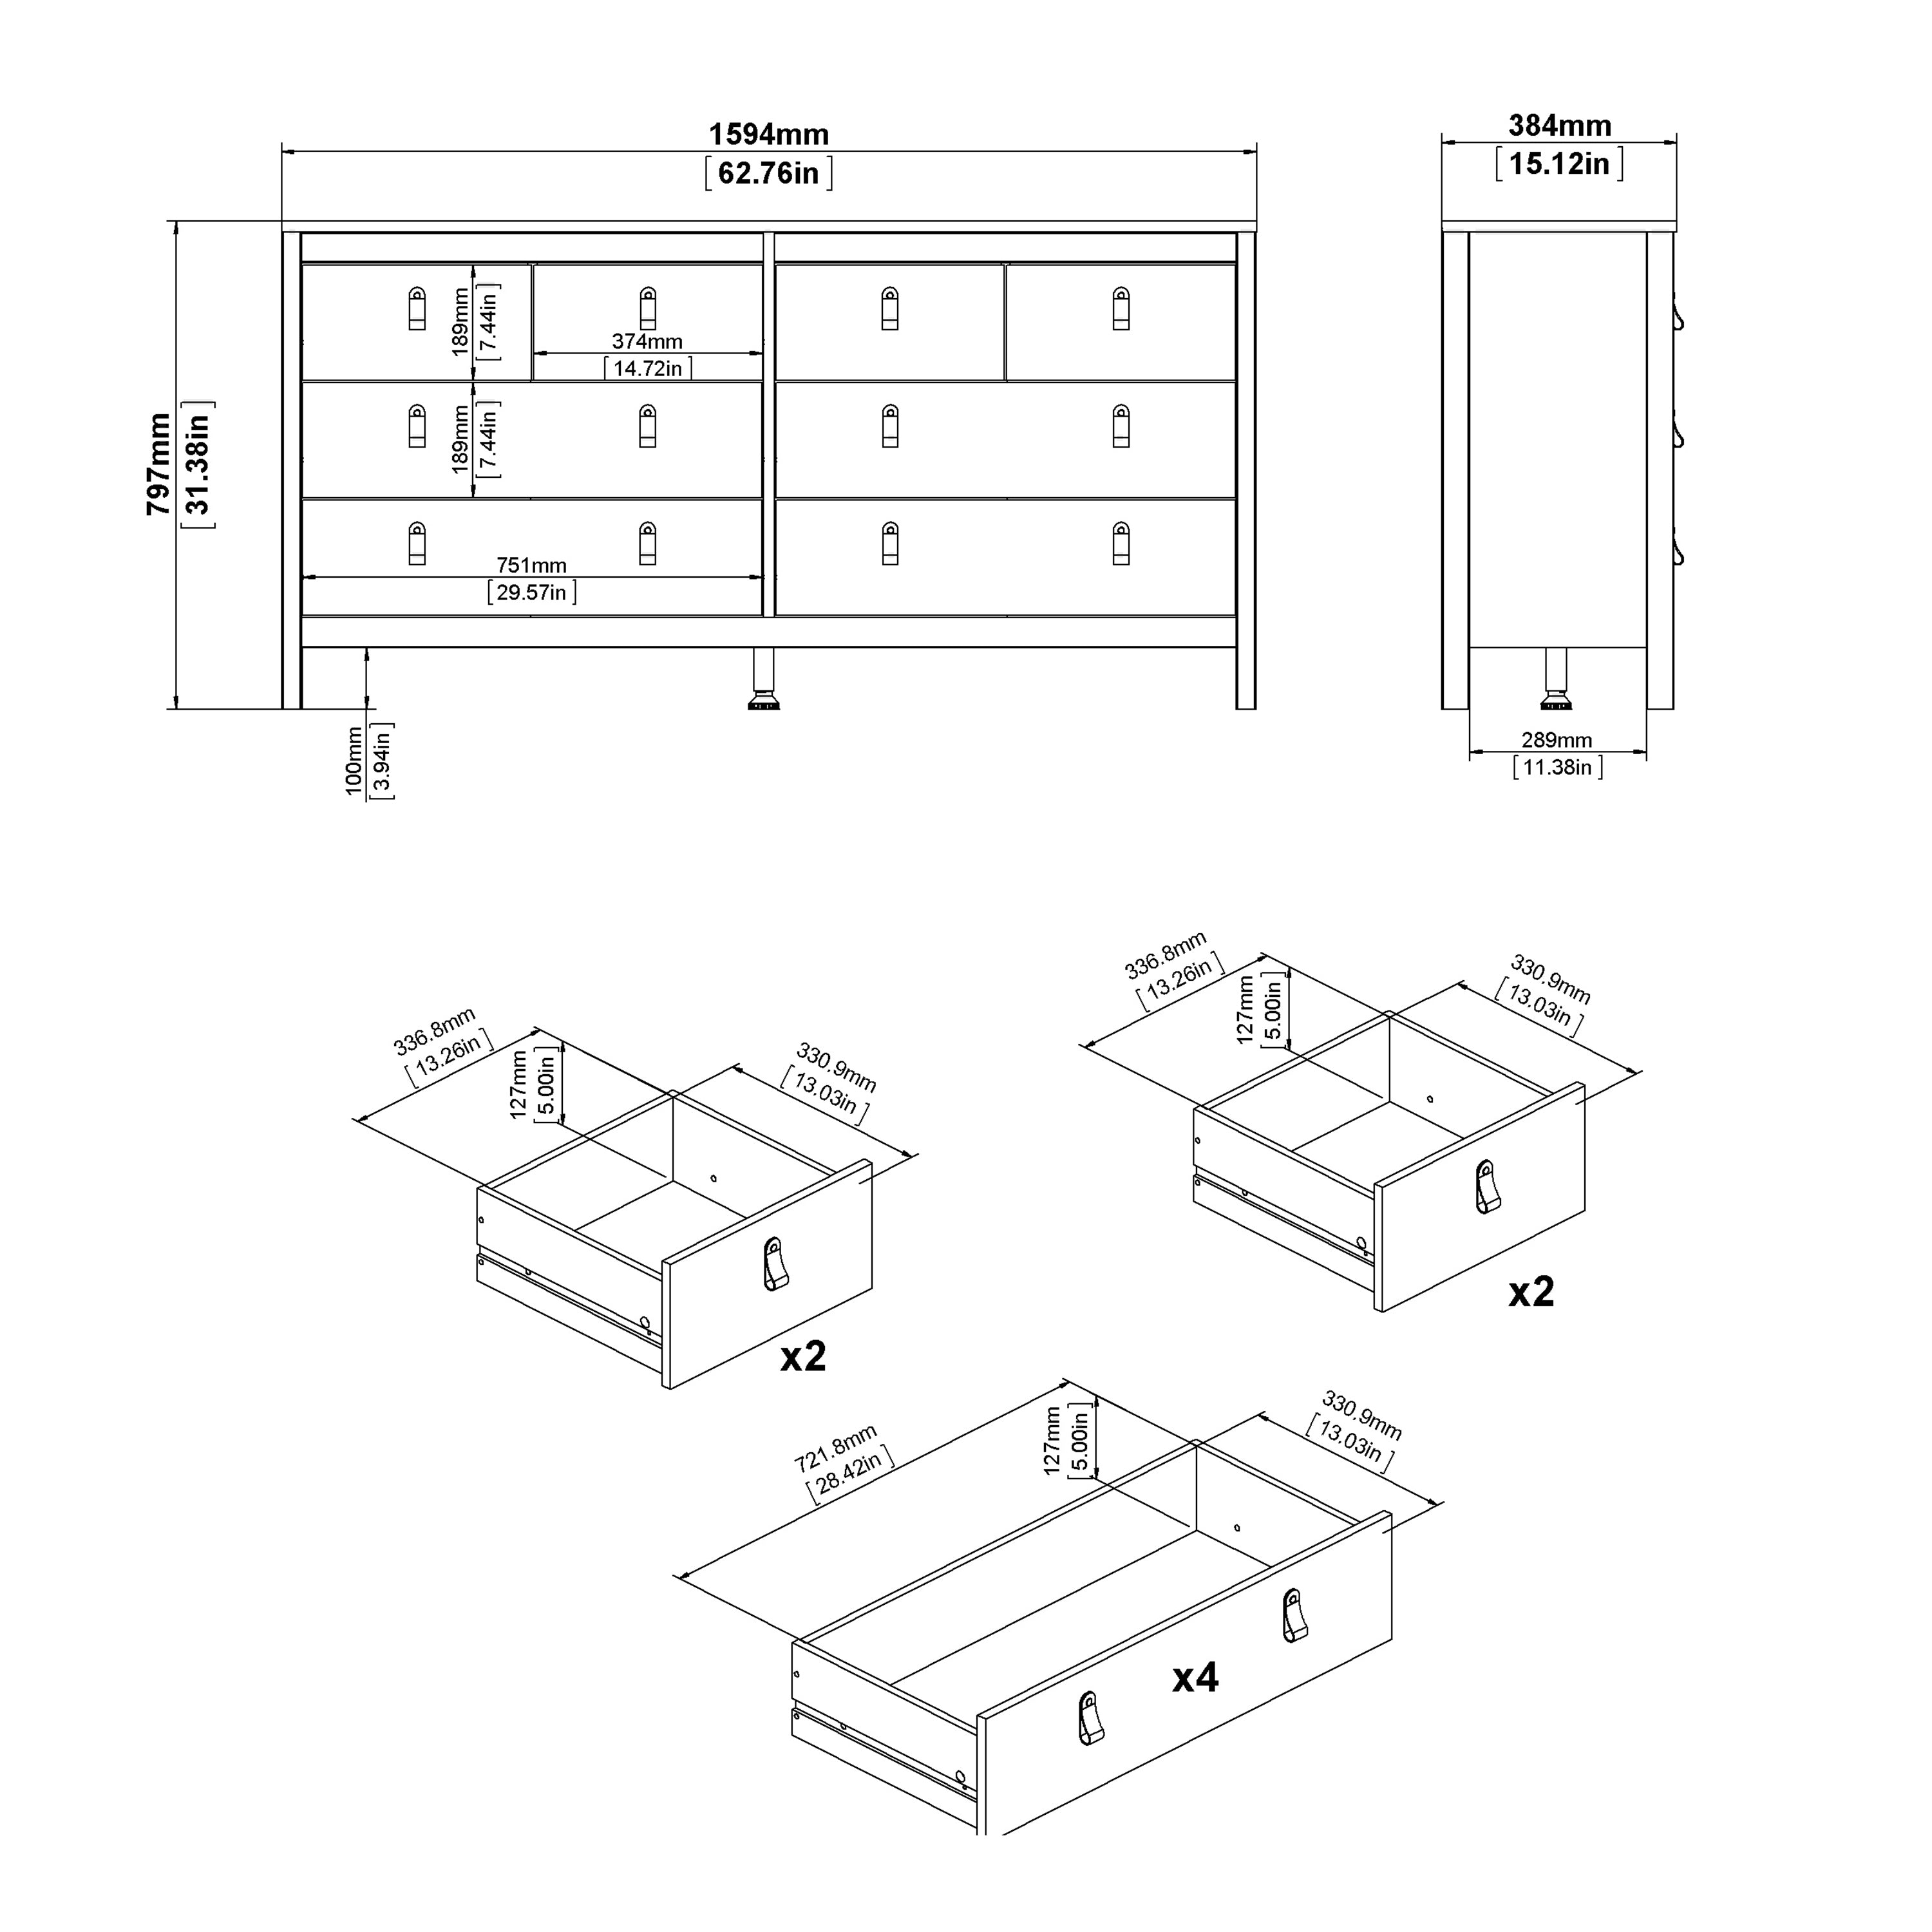 Barcelona Double Dresser 4+4 Drawers in Matt Black Furniture To Go Ltd